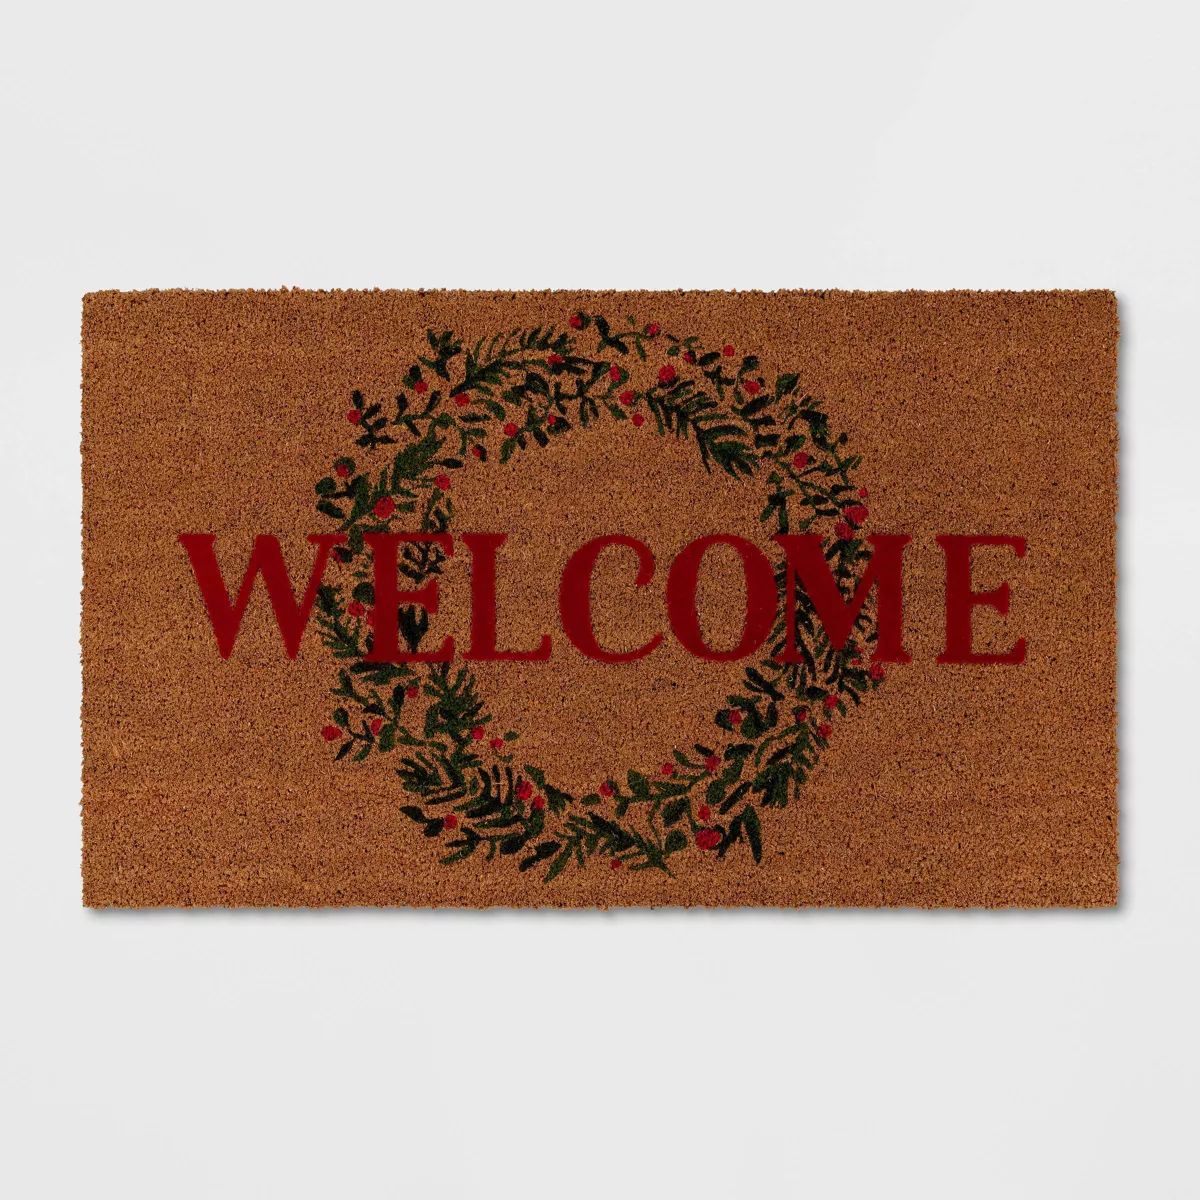 1'6"x2'6" 'Welcome' Wreath Flocked Coir Christmas Doormat Red/Green - Wondershop™ | Target